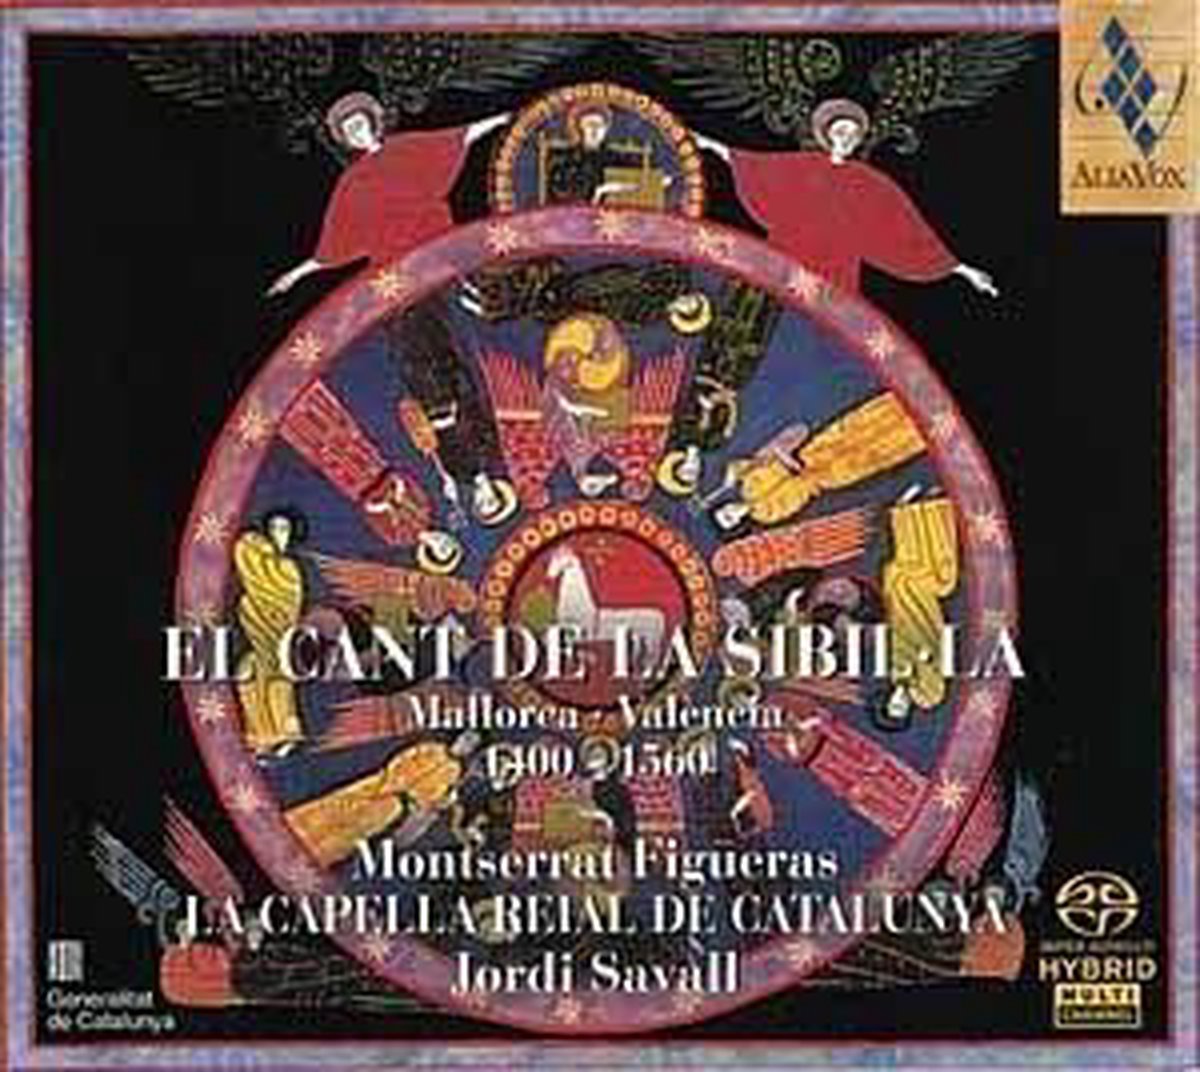 Jordi Savall & Figueras, Mont - Cant De La Sibilla 3 (CD) - various artists